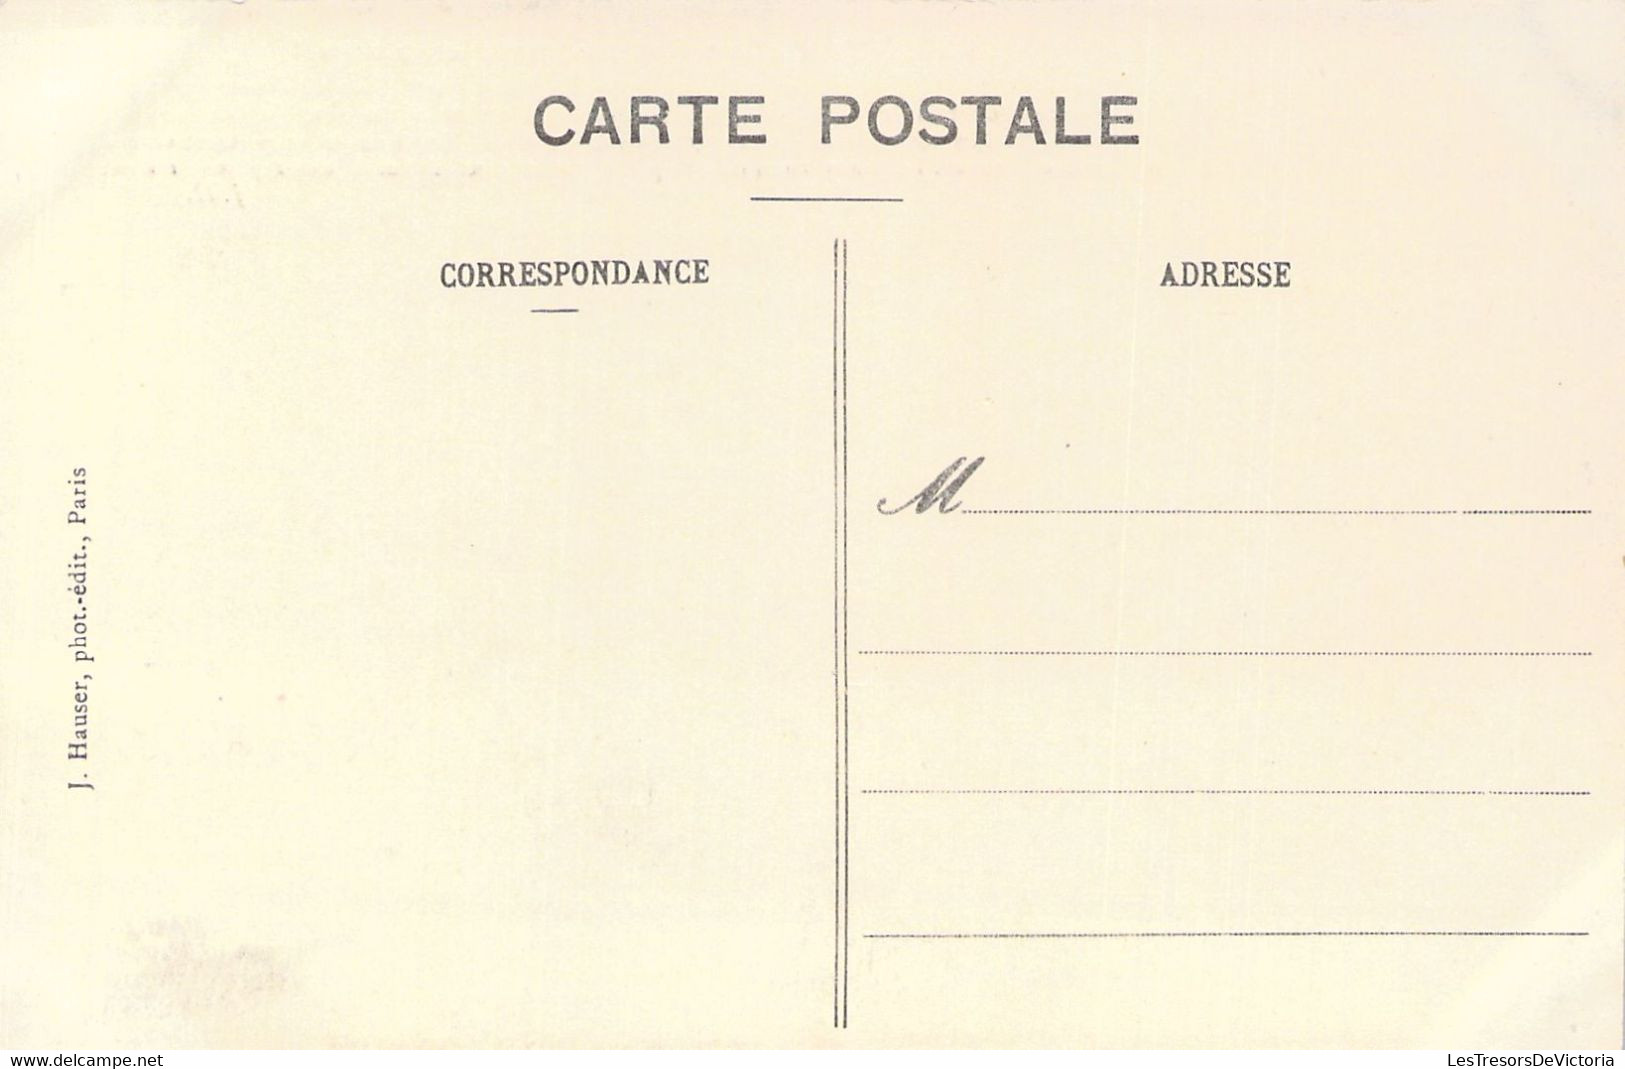 CPA - AVIATION PRECURSEUR - AEROPLANE Roger Sommer En Plein Vol - J HAUSER - ....-1914: Précurseurs